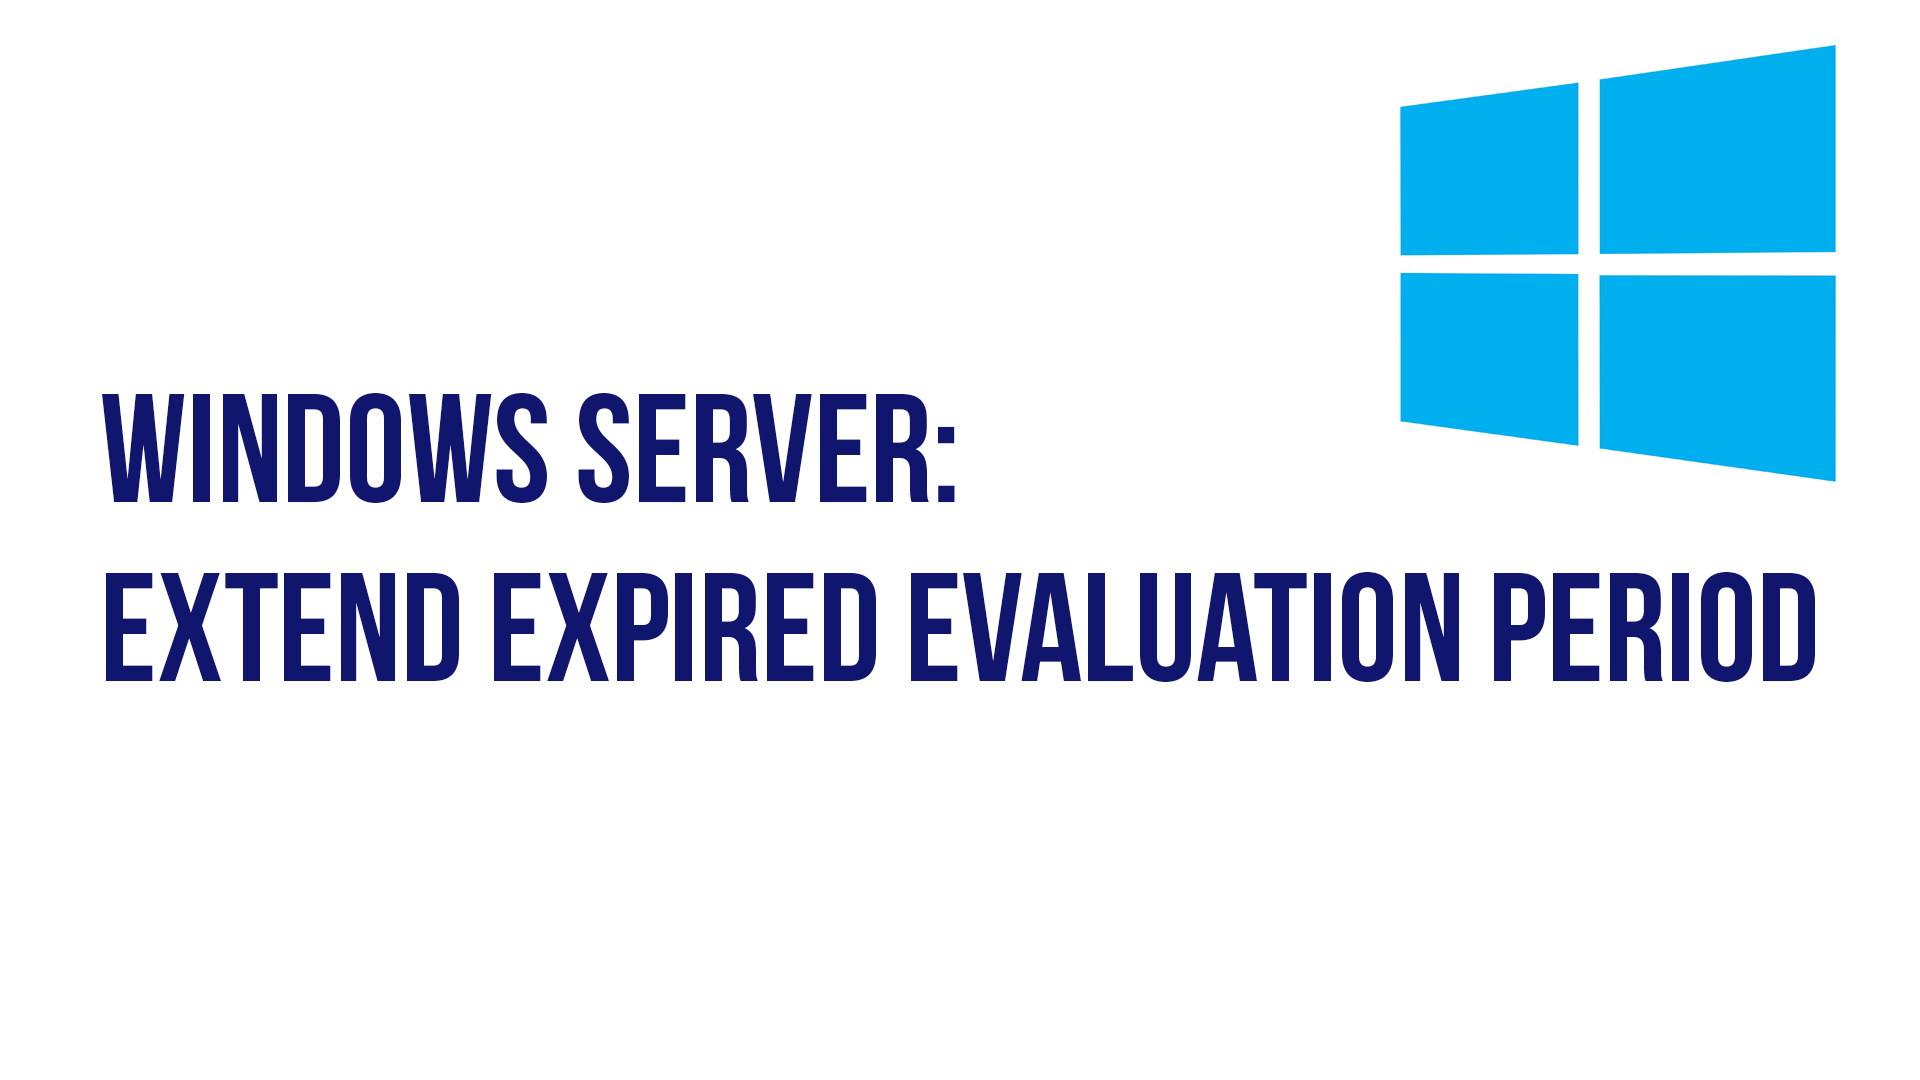 Windows Server: Extend expired Evaluation Period